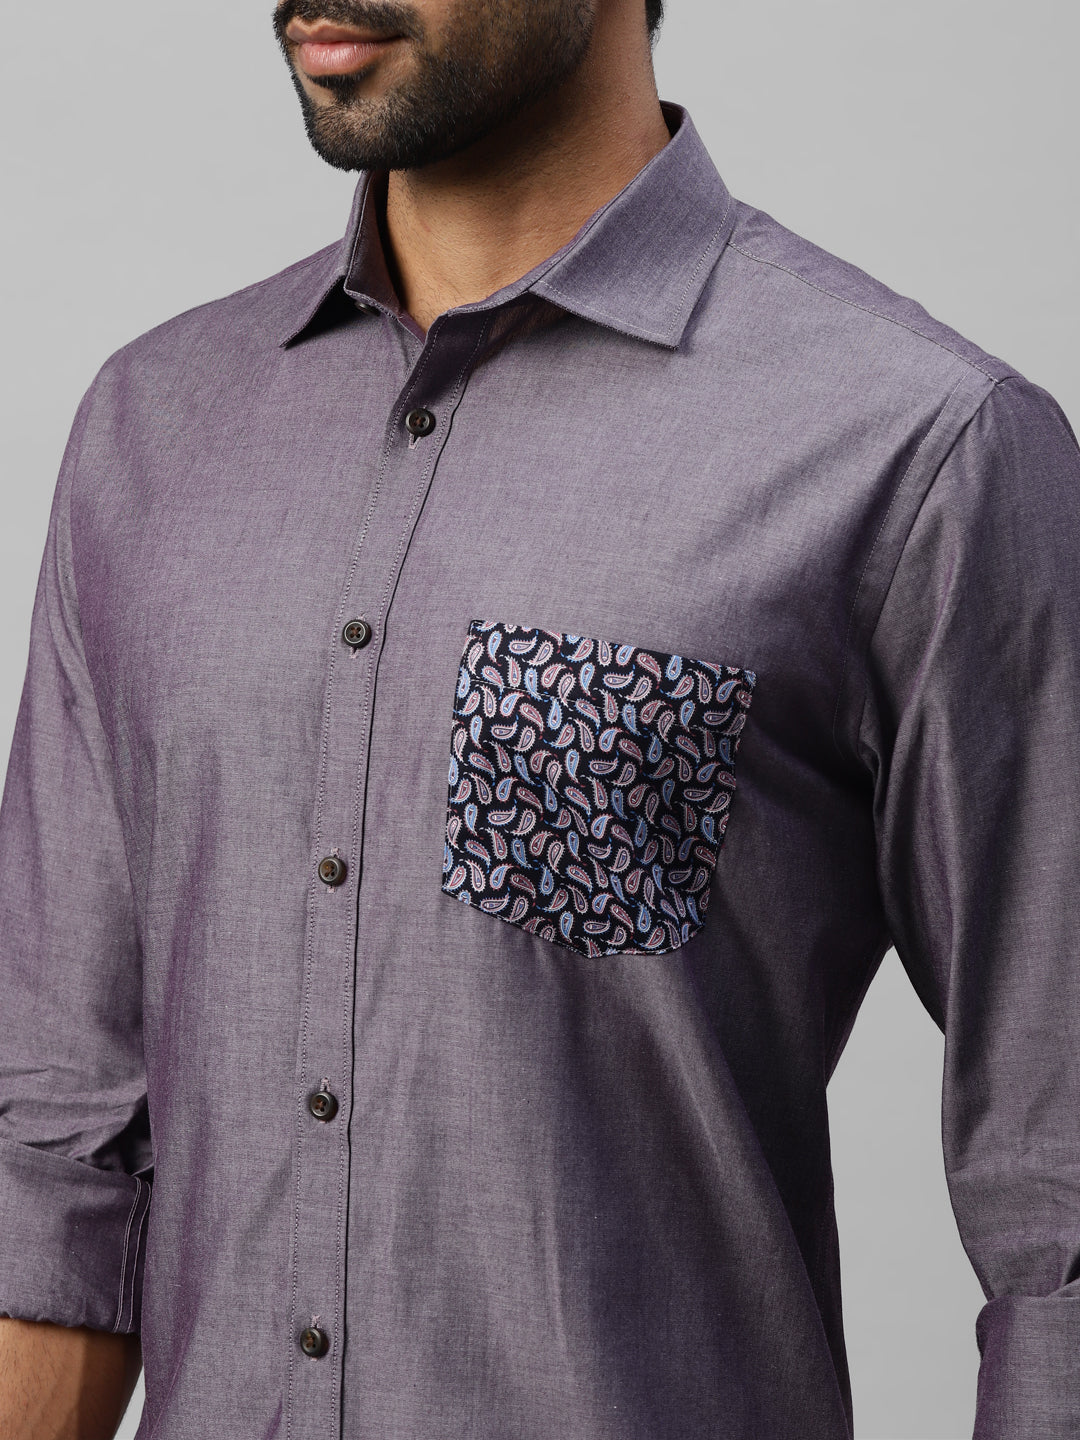 Men's purple slim fit shirt with contrast pockets